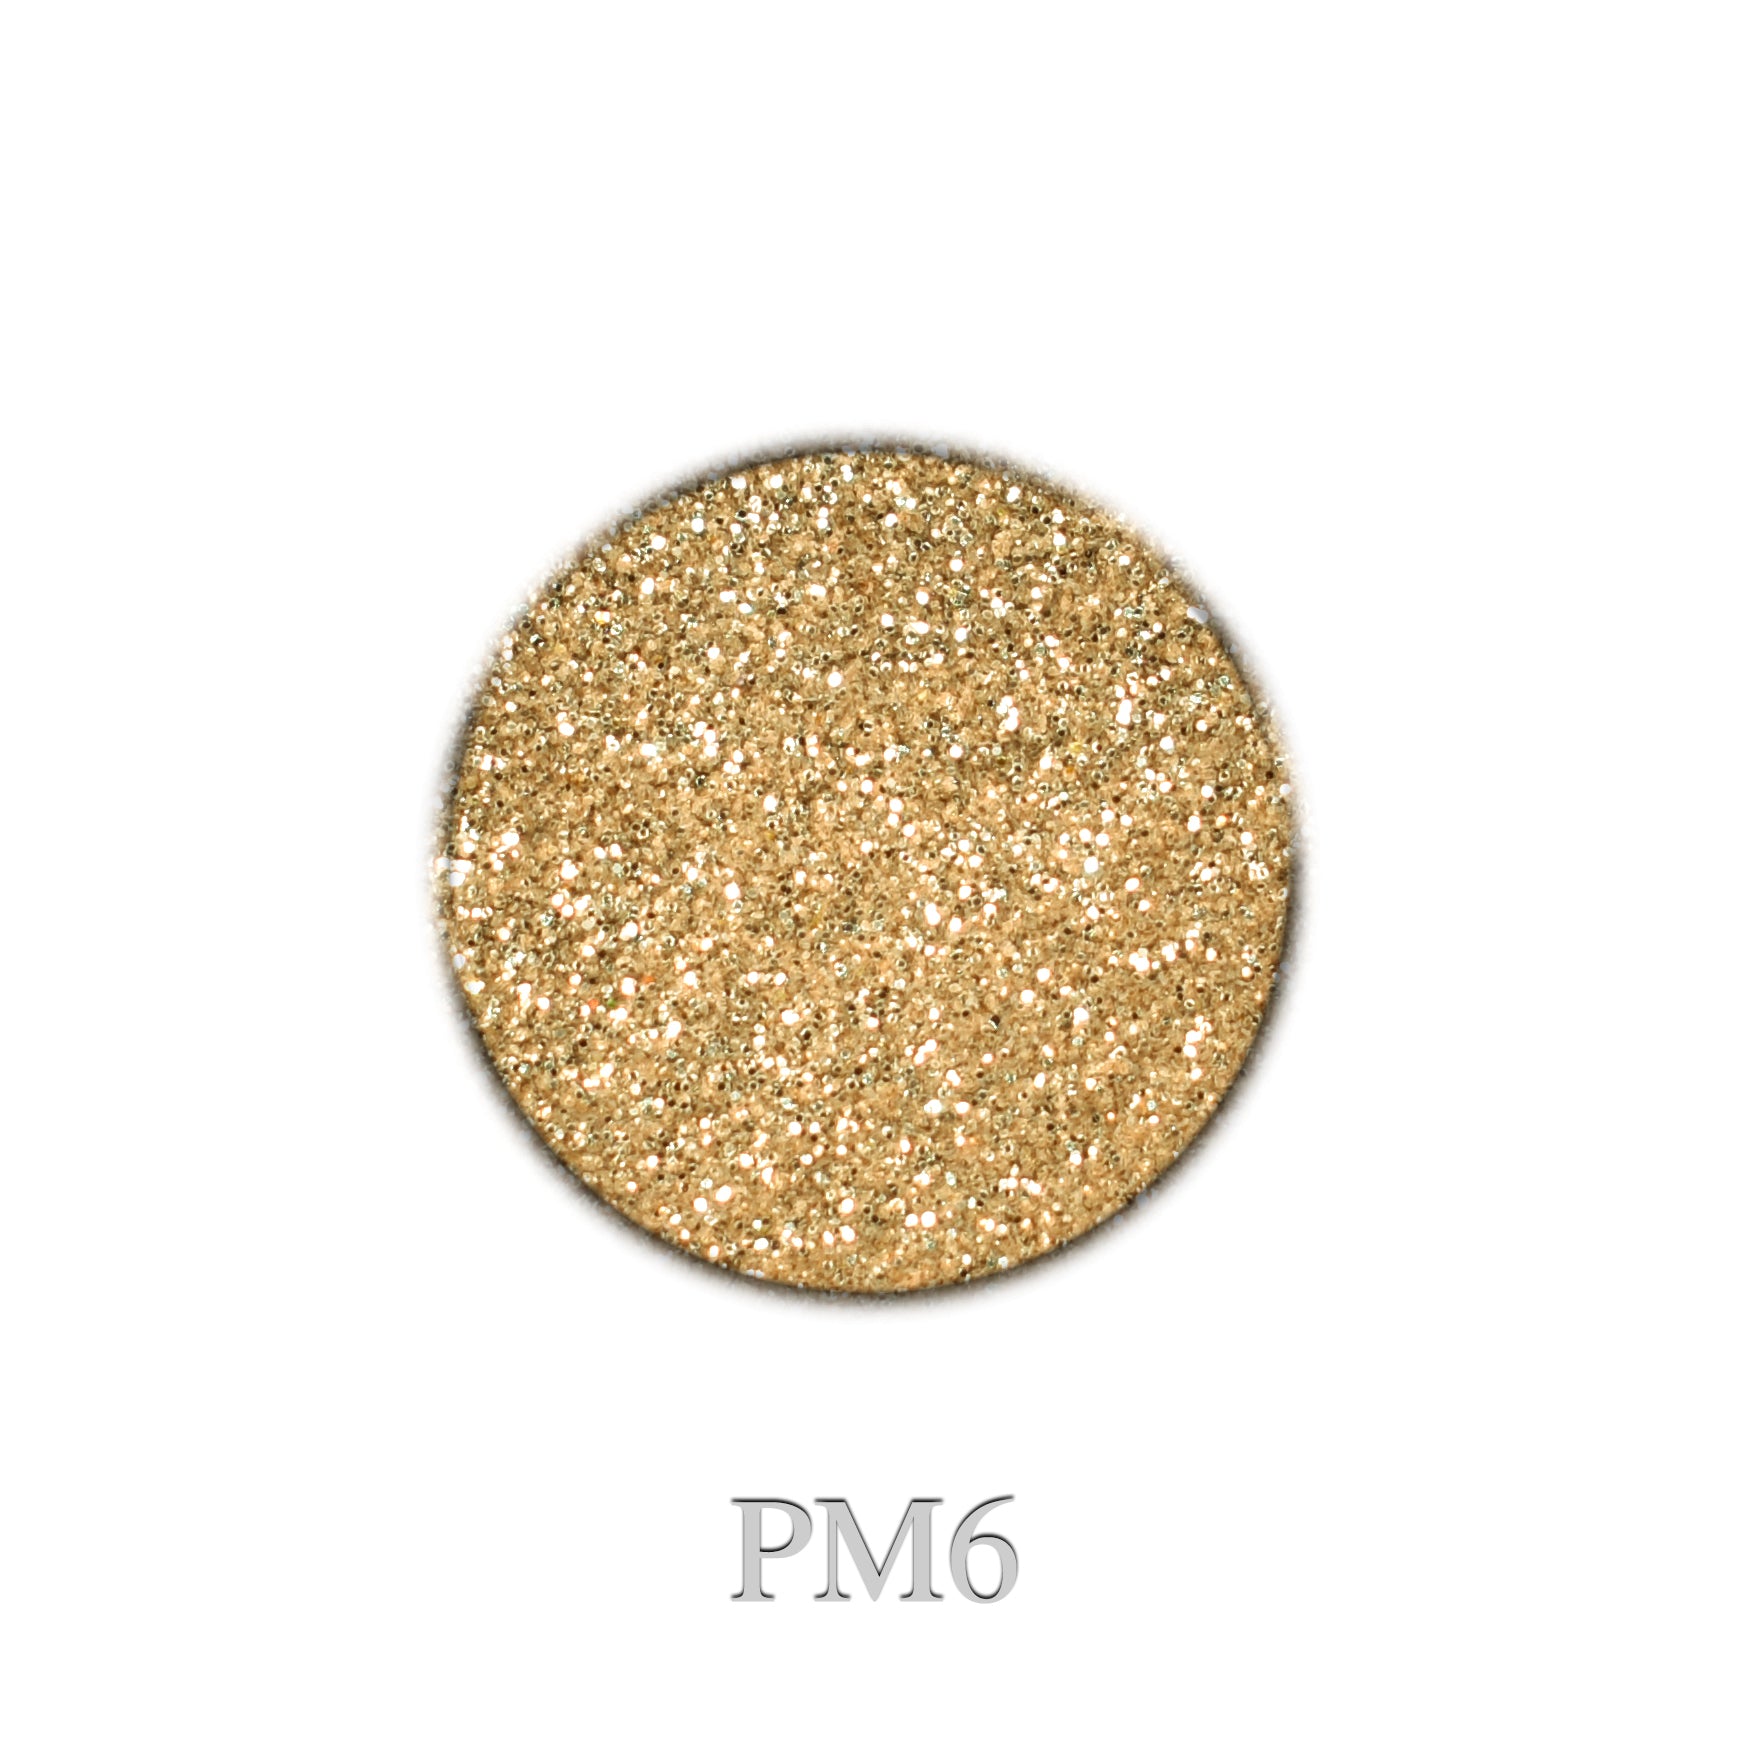 Precious Metal Glitter PM6